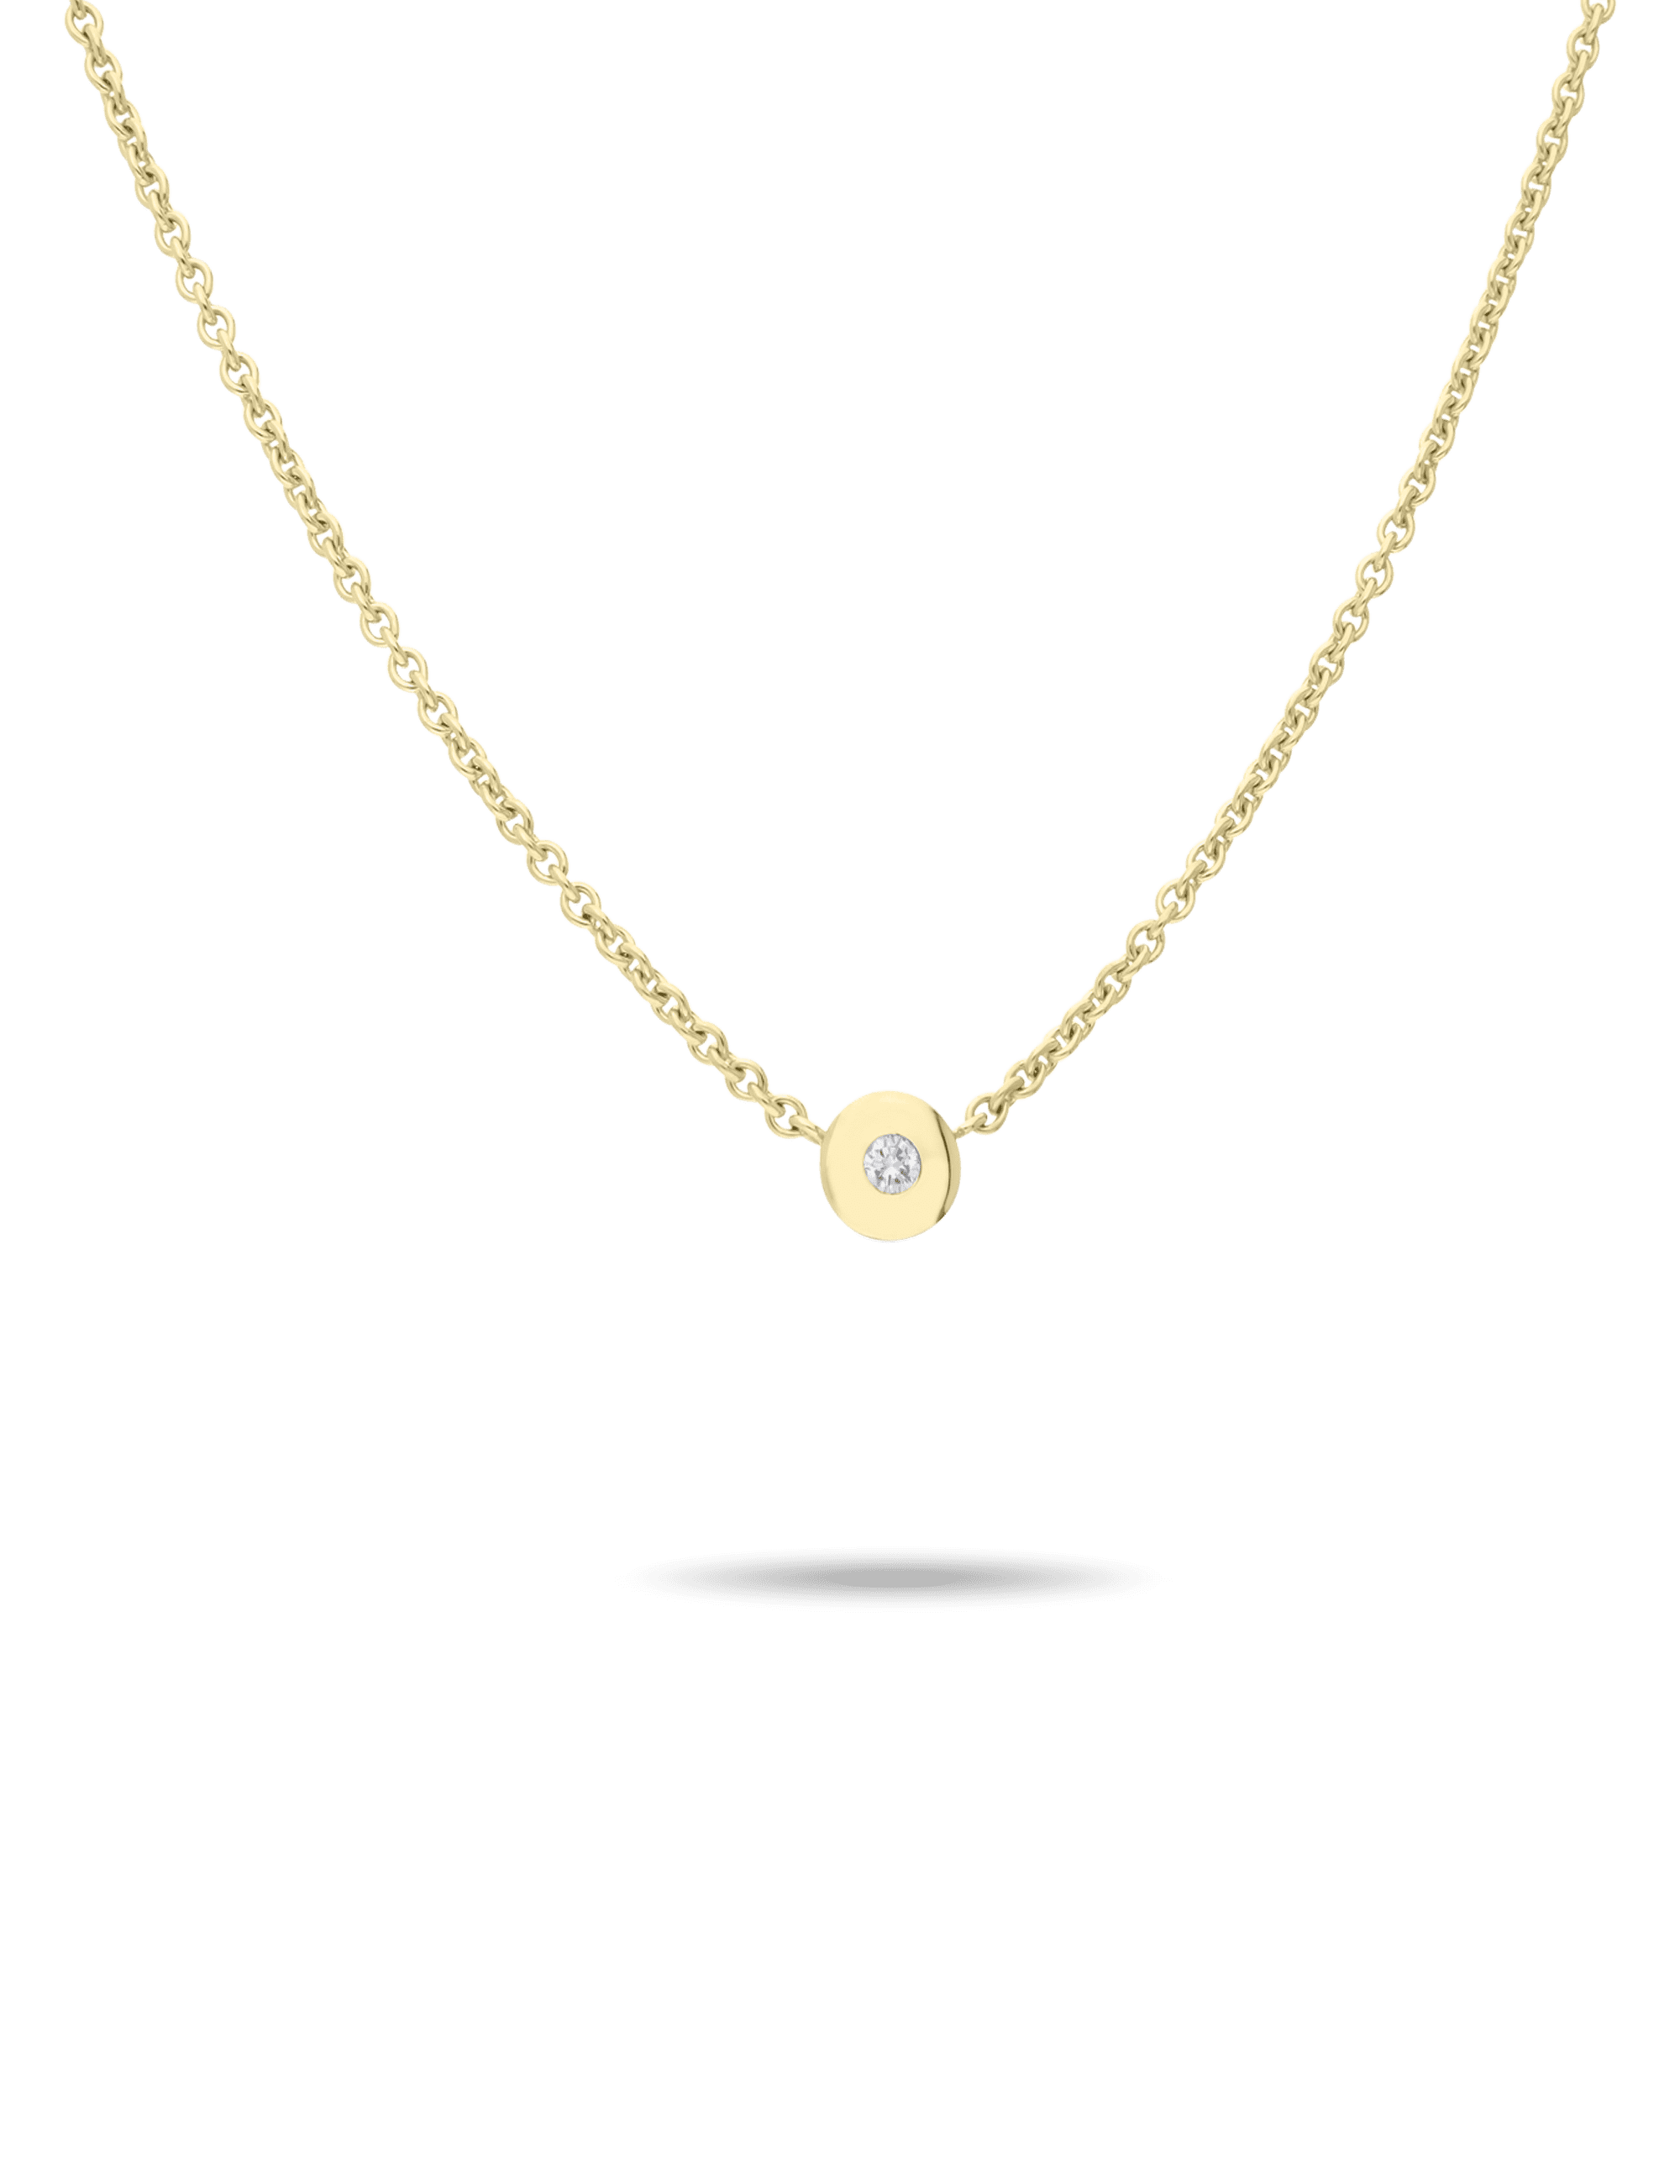 Premium Collier, 585/- Gold mit Diamant 0,06 Karat